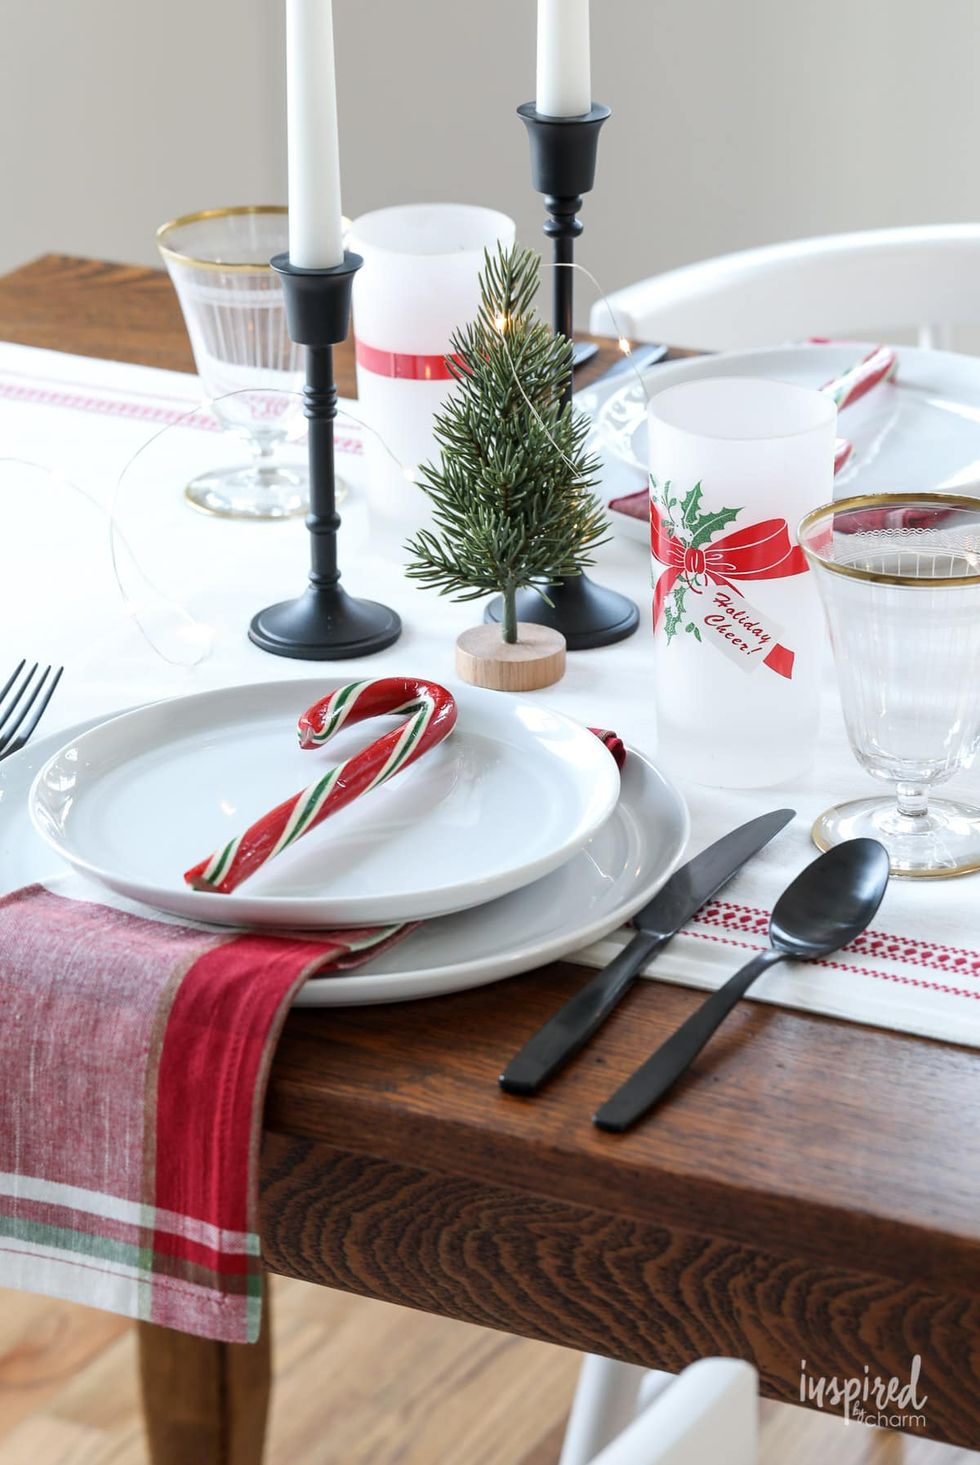 150 Best Christmas Centerpieces Decoration Ideas For Tables